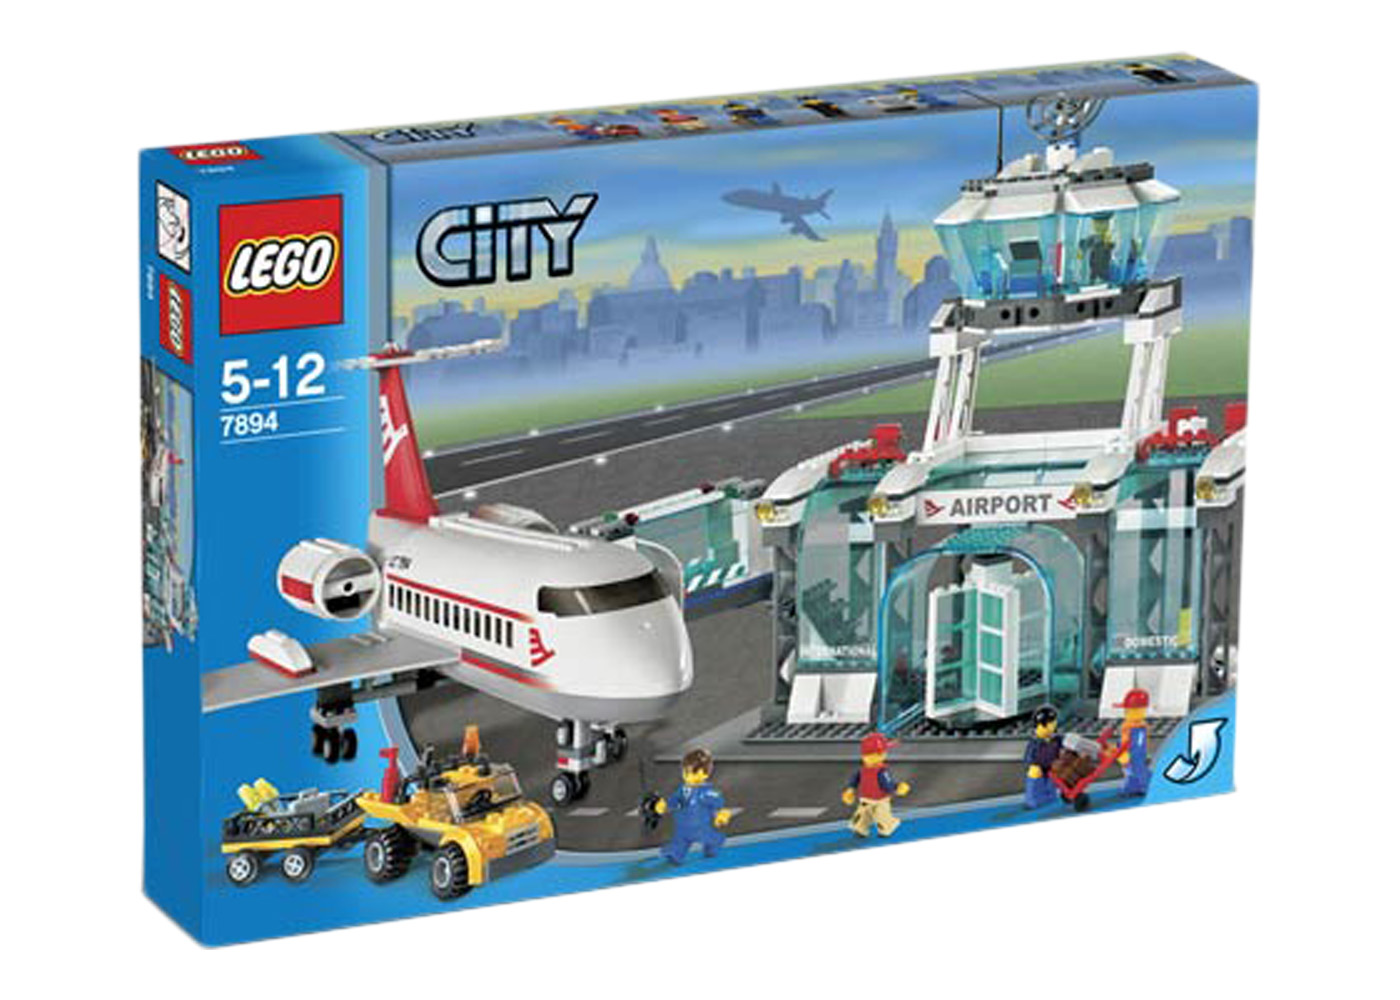 LEGO City Airport Air Show Set 60103 - US